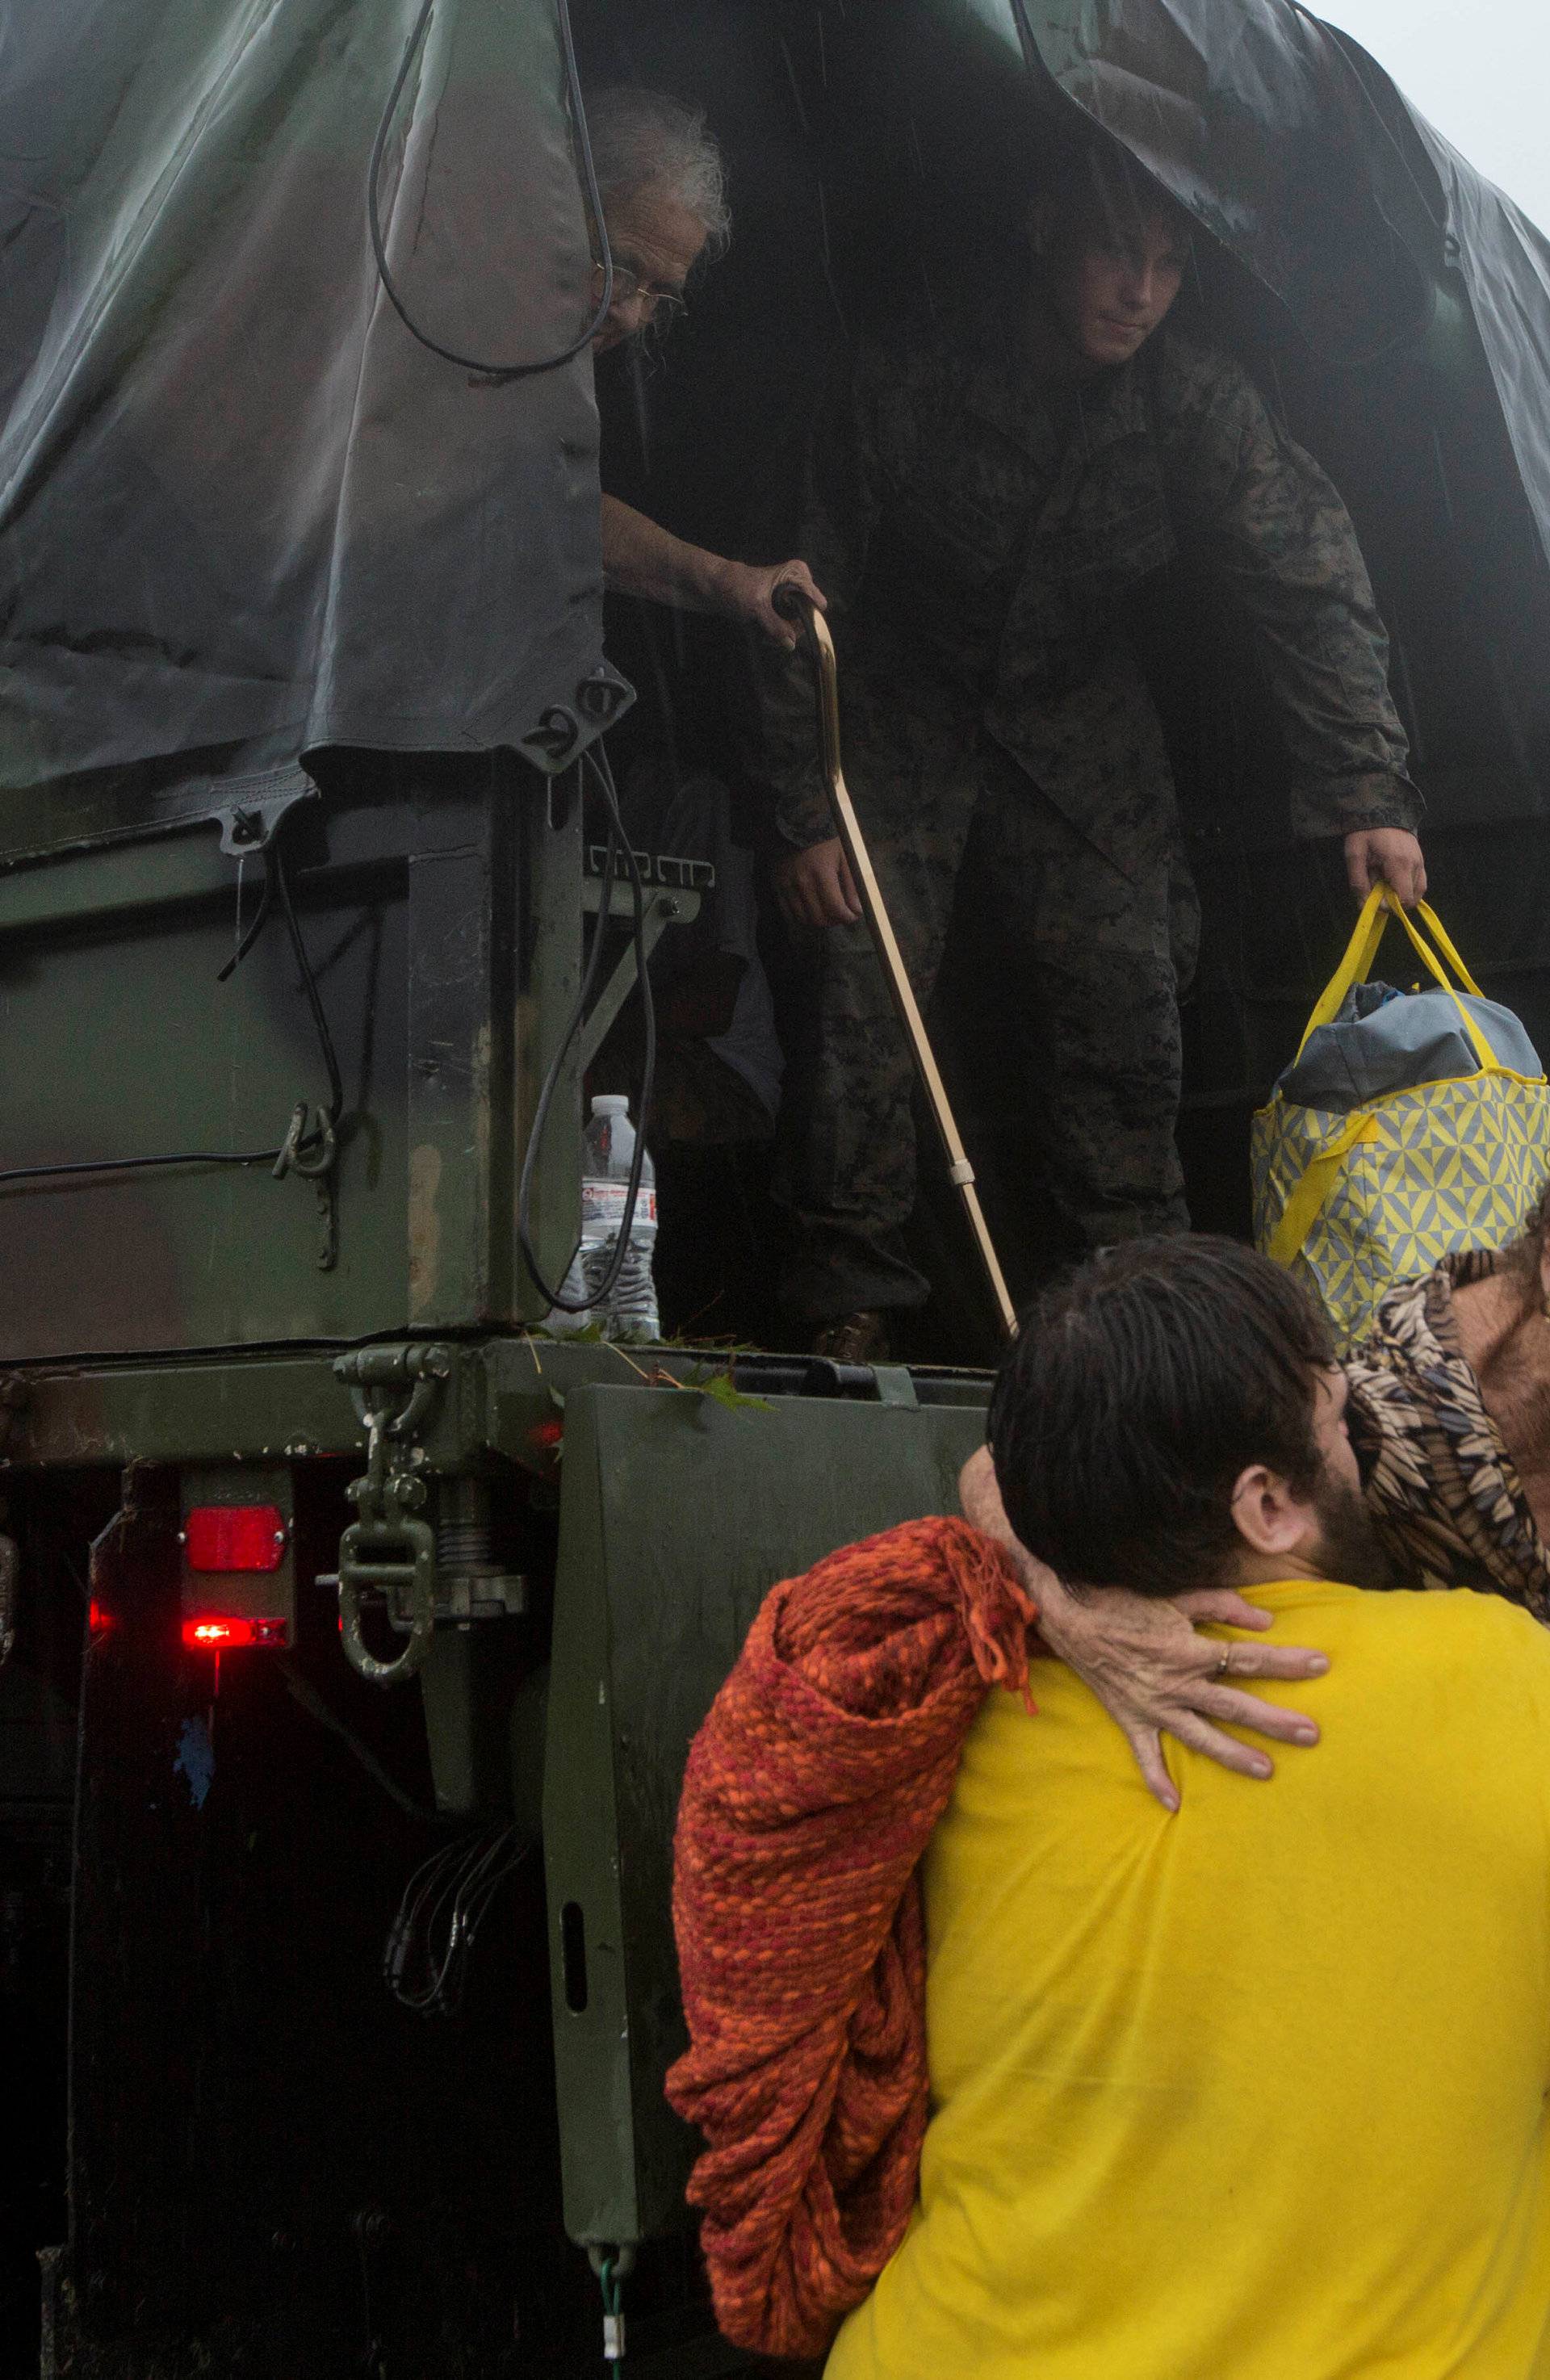 U.S. Marines help in evacuating people stranded by Hurricane Florence flooding in Jacksonville